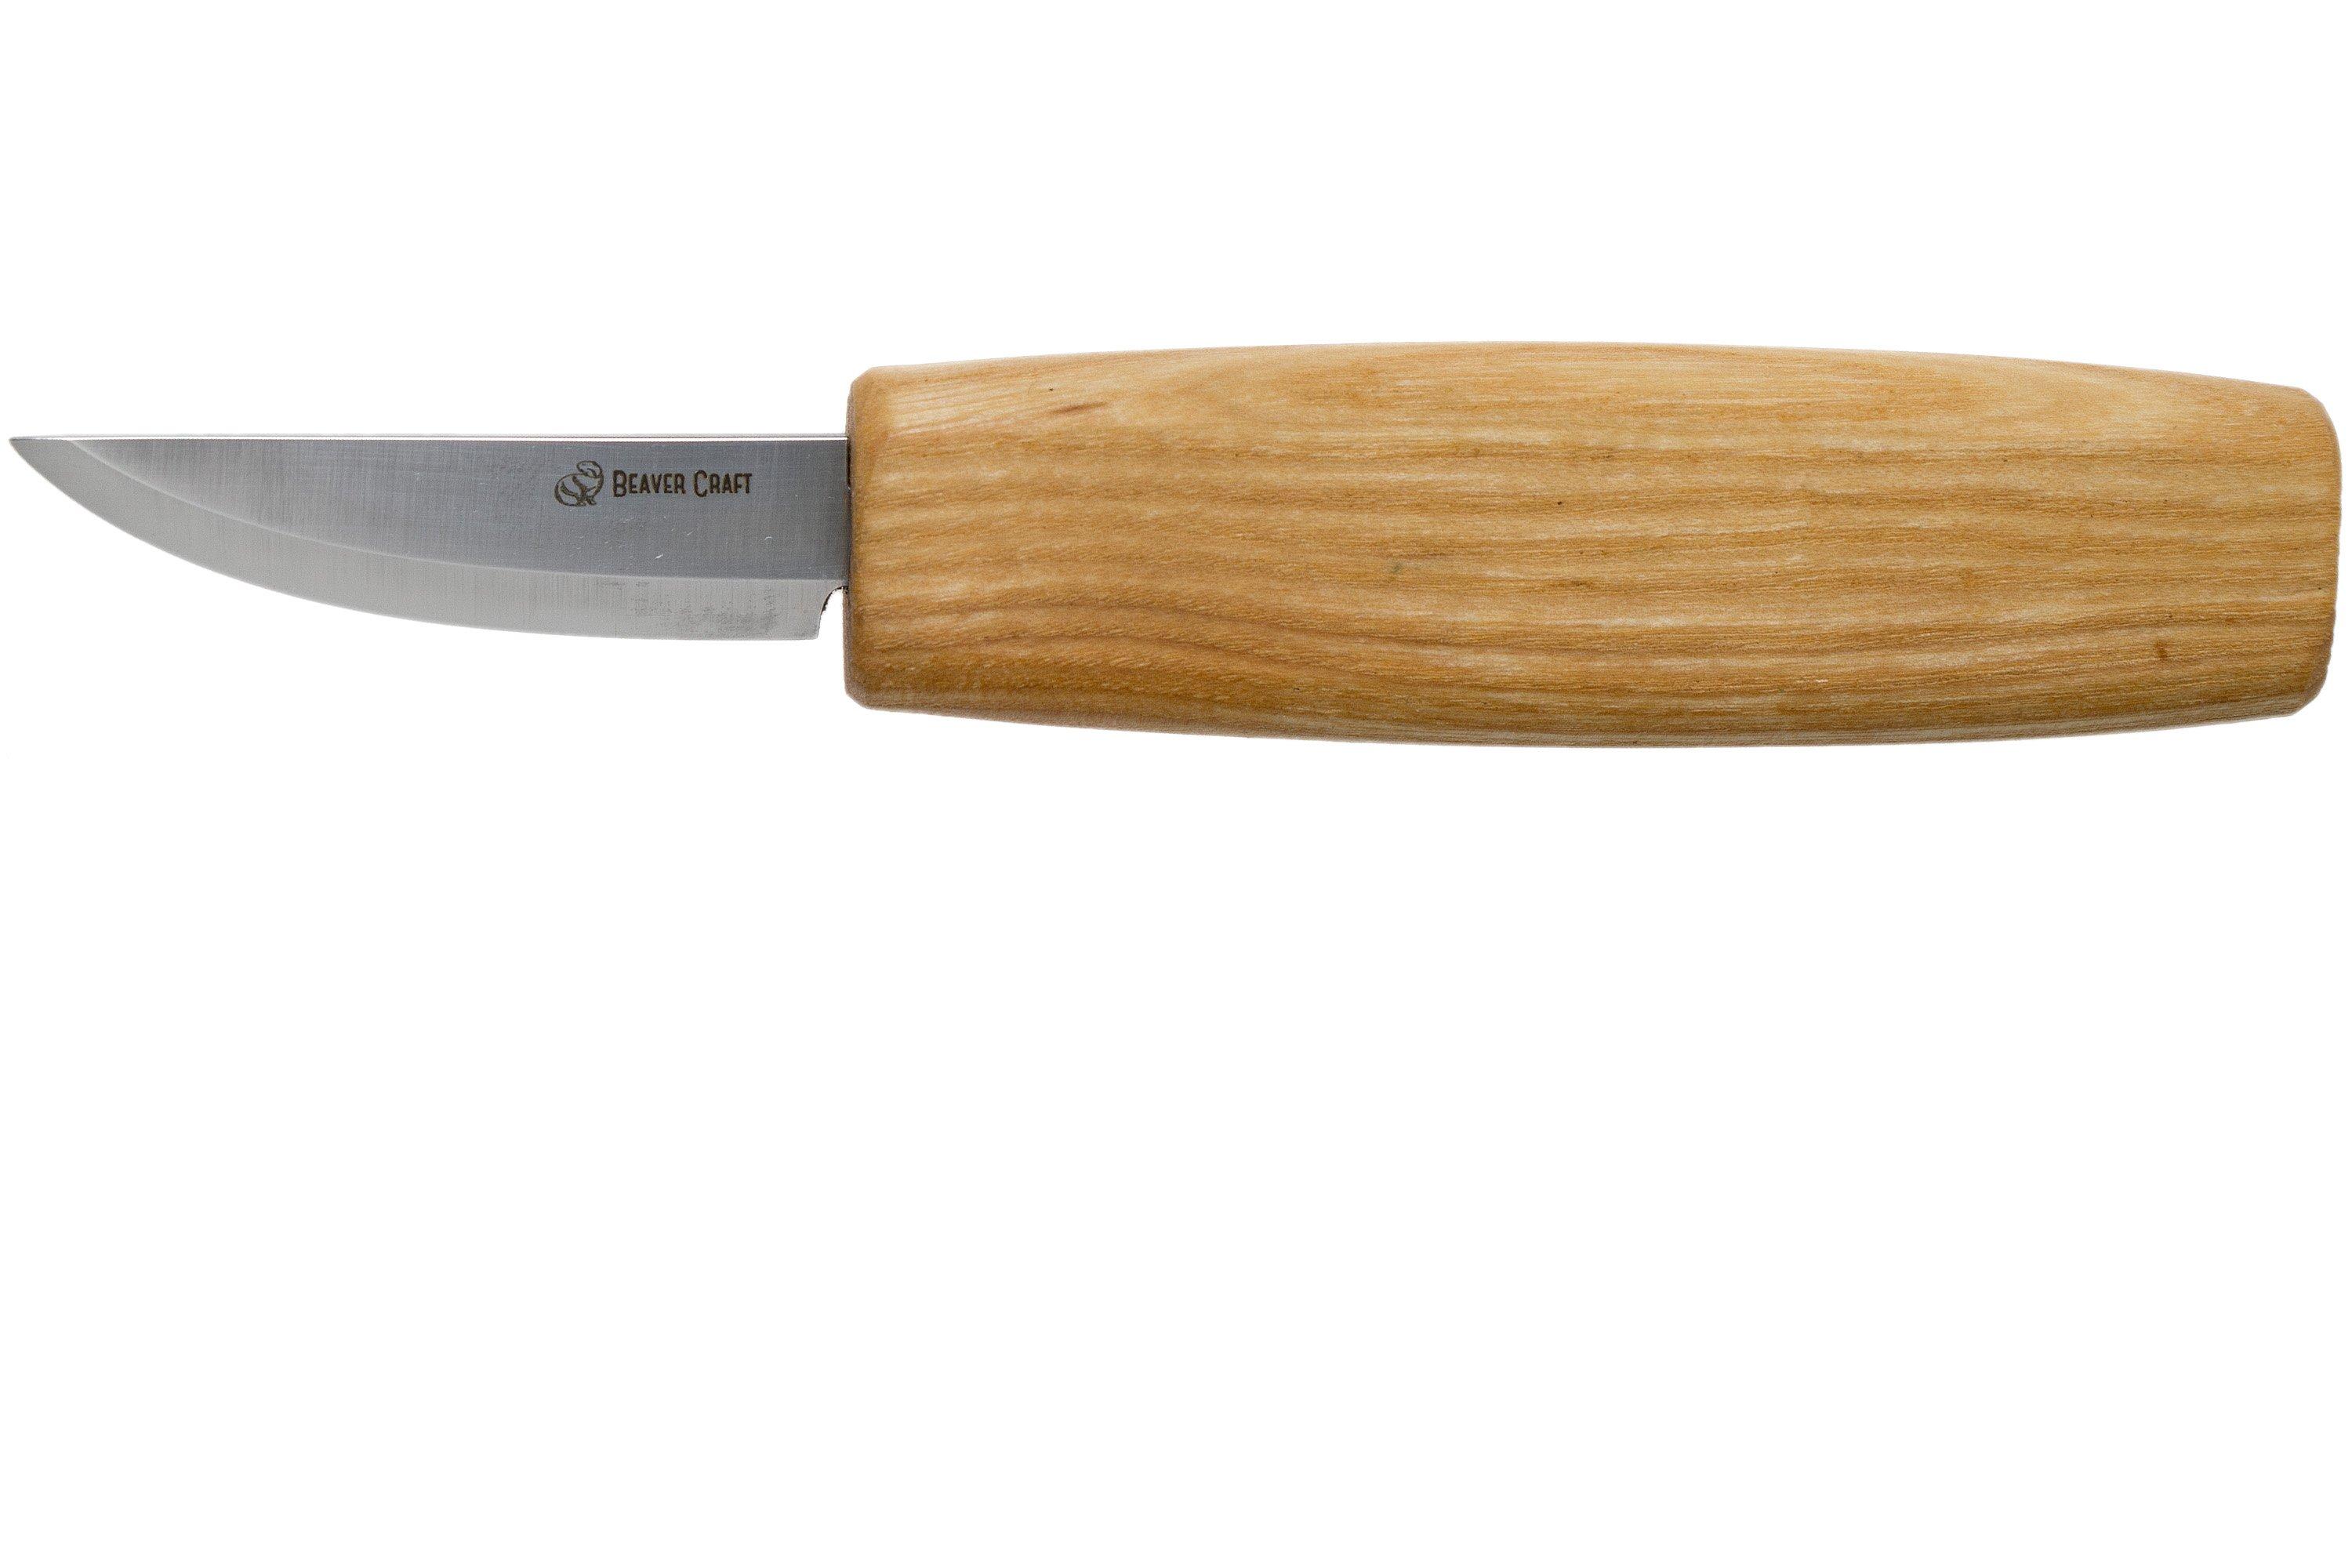 Beaver Craft Whittling Knife for Kids and Beginners - C1